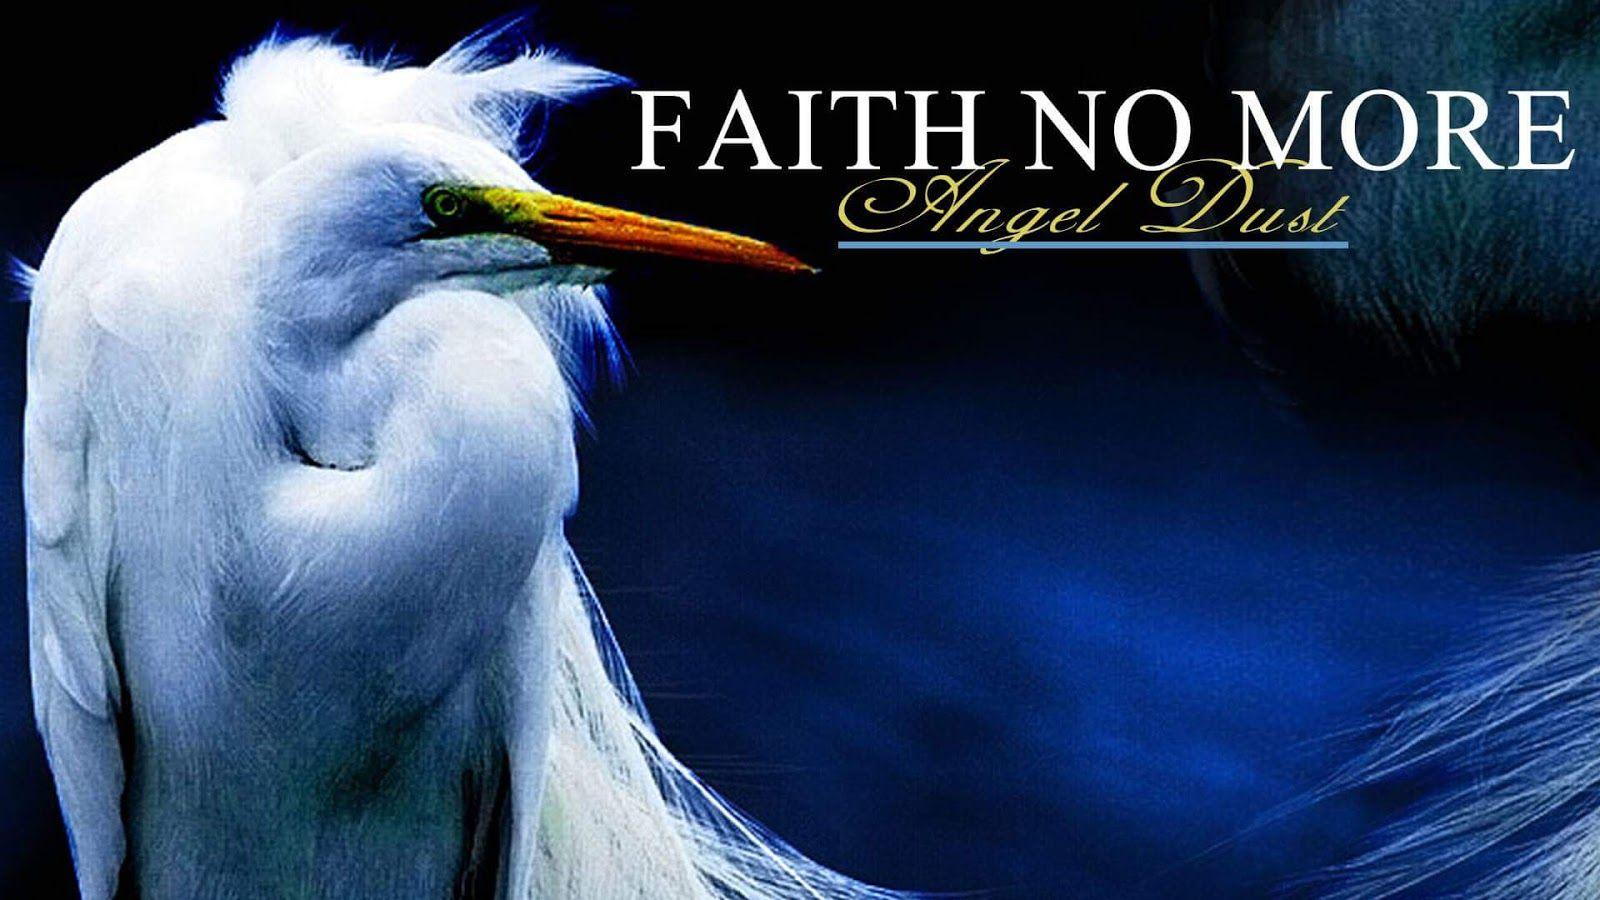 FNM4EVER: Faith No More Fans: Wallpaper FNM X4